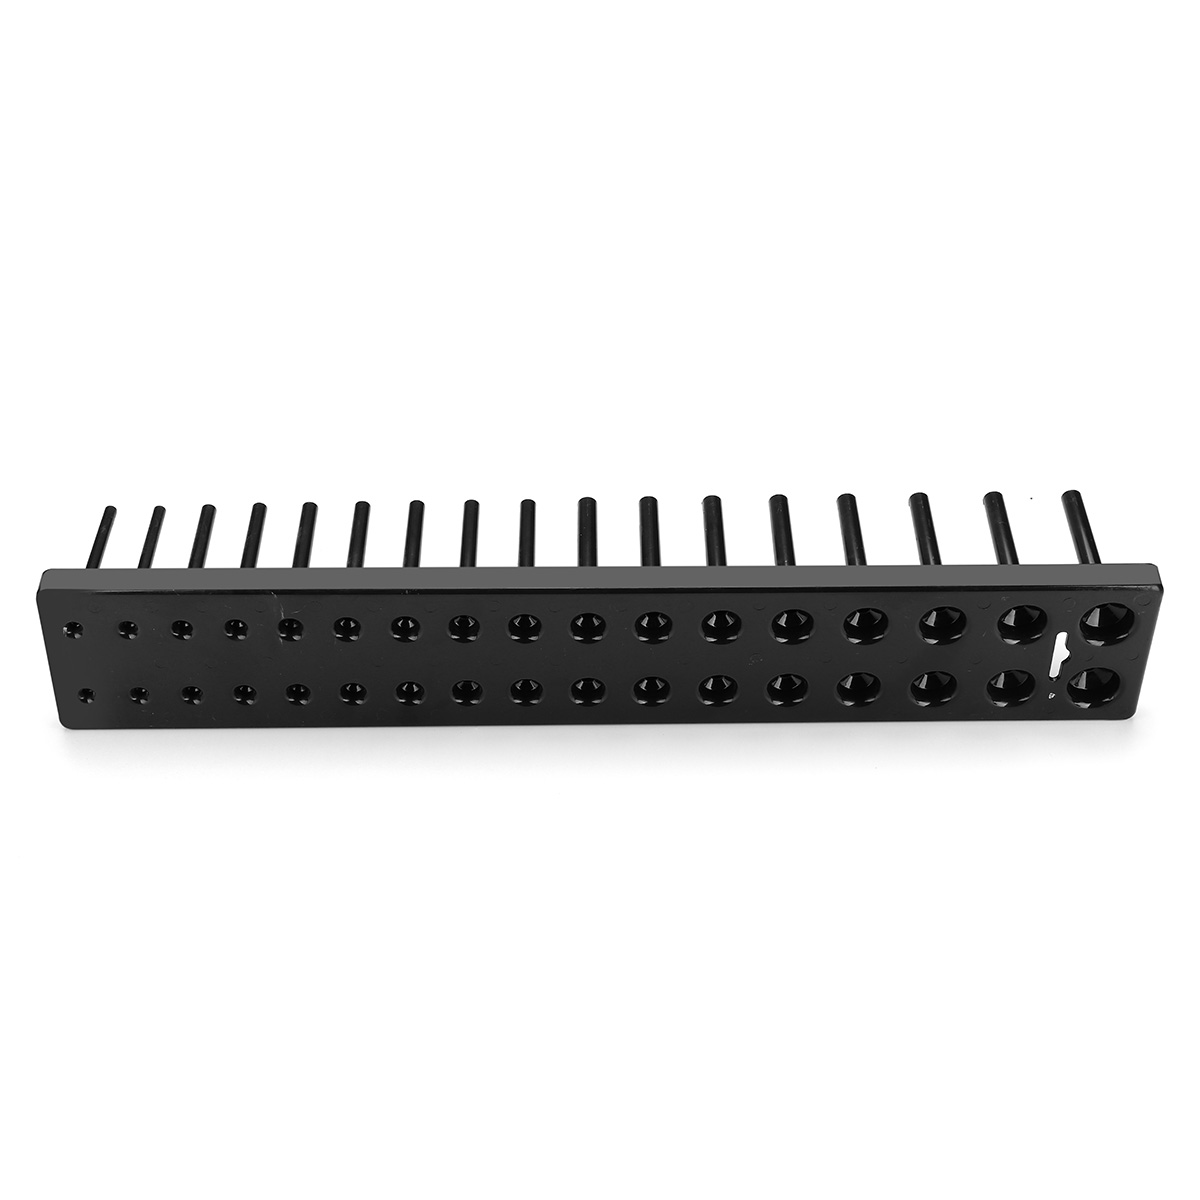 12-Inch-Metric-34-Slot-Socket-Rack-Storage-Rail-Tray-Holder-Shelf-Organizer-Machinery-Parts-1297969-10